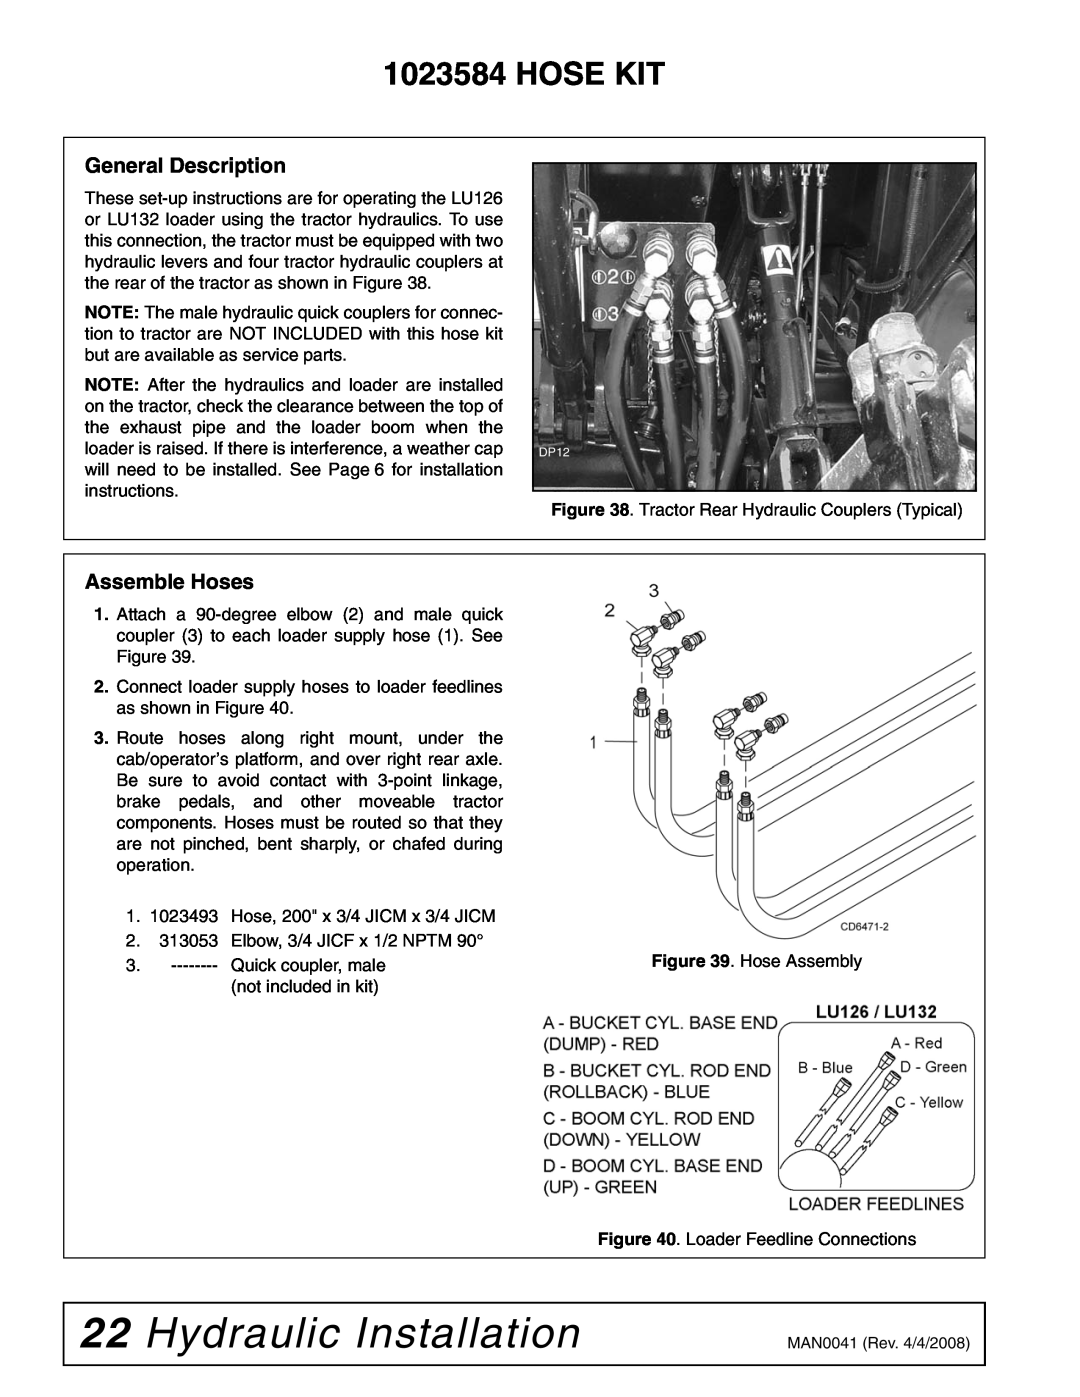 Woods Equipment LU126 installation manual Hydraulic Installation, Hose Kit, General Description, Assemble Hoses 